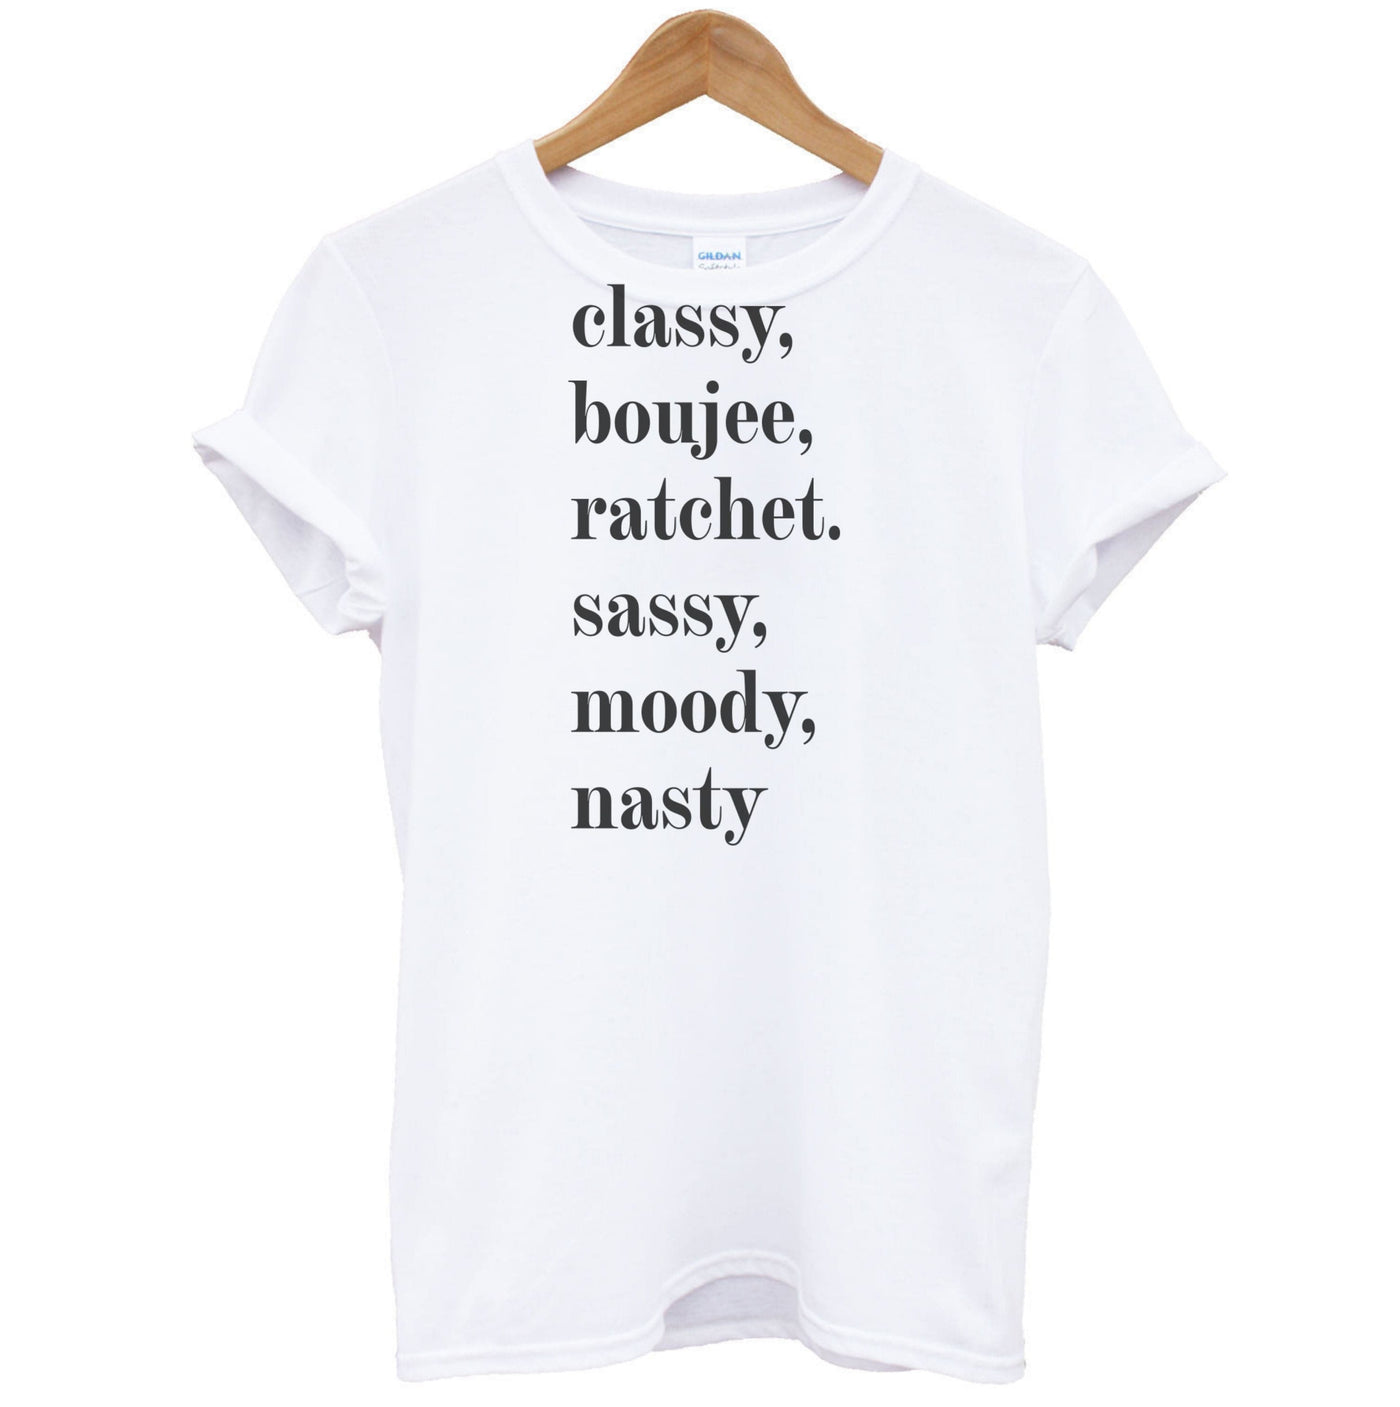 Classy Boujee Ratchet. Sassy Moddy Nasty - TikTok T-Shirt